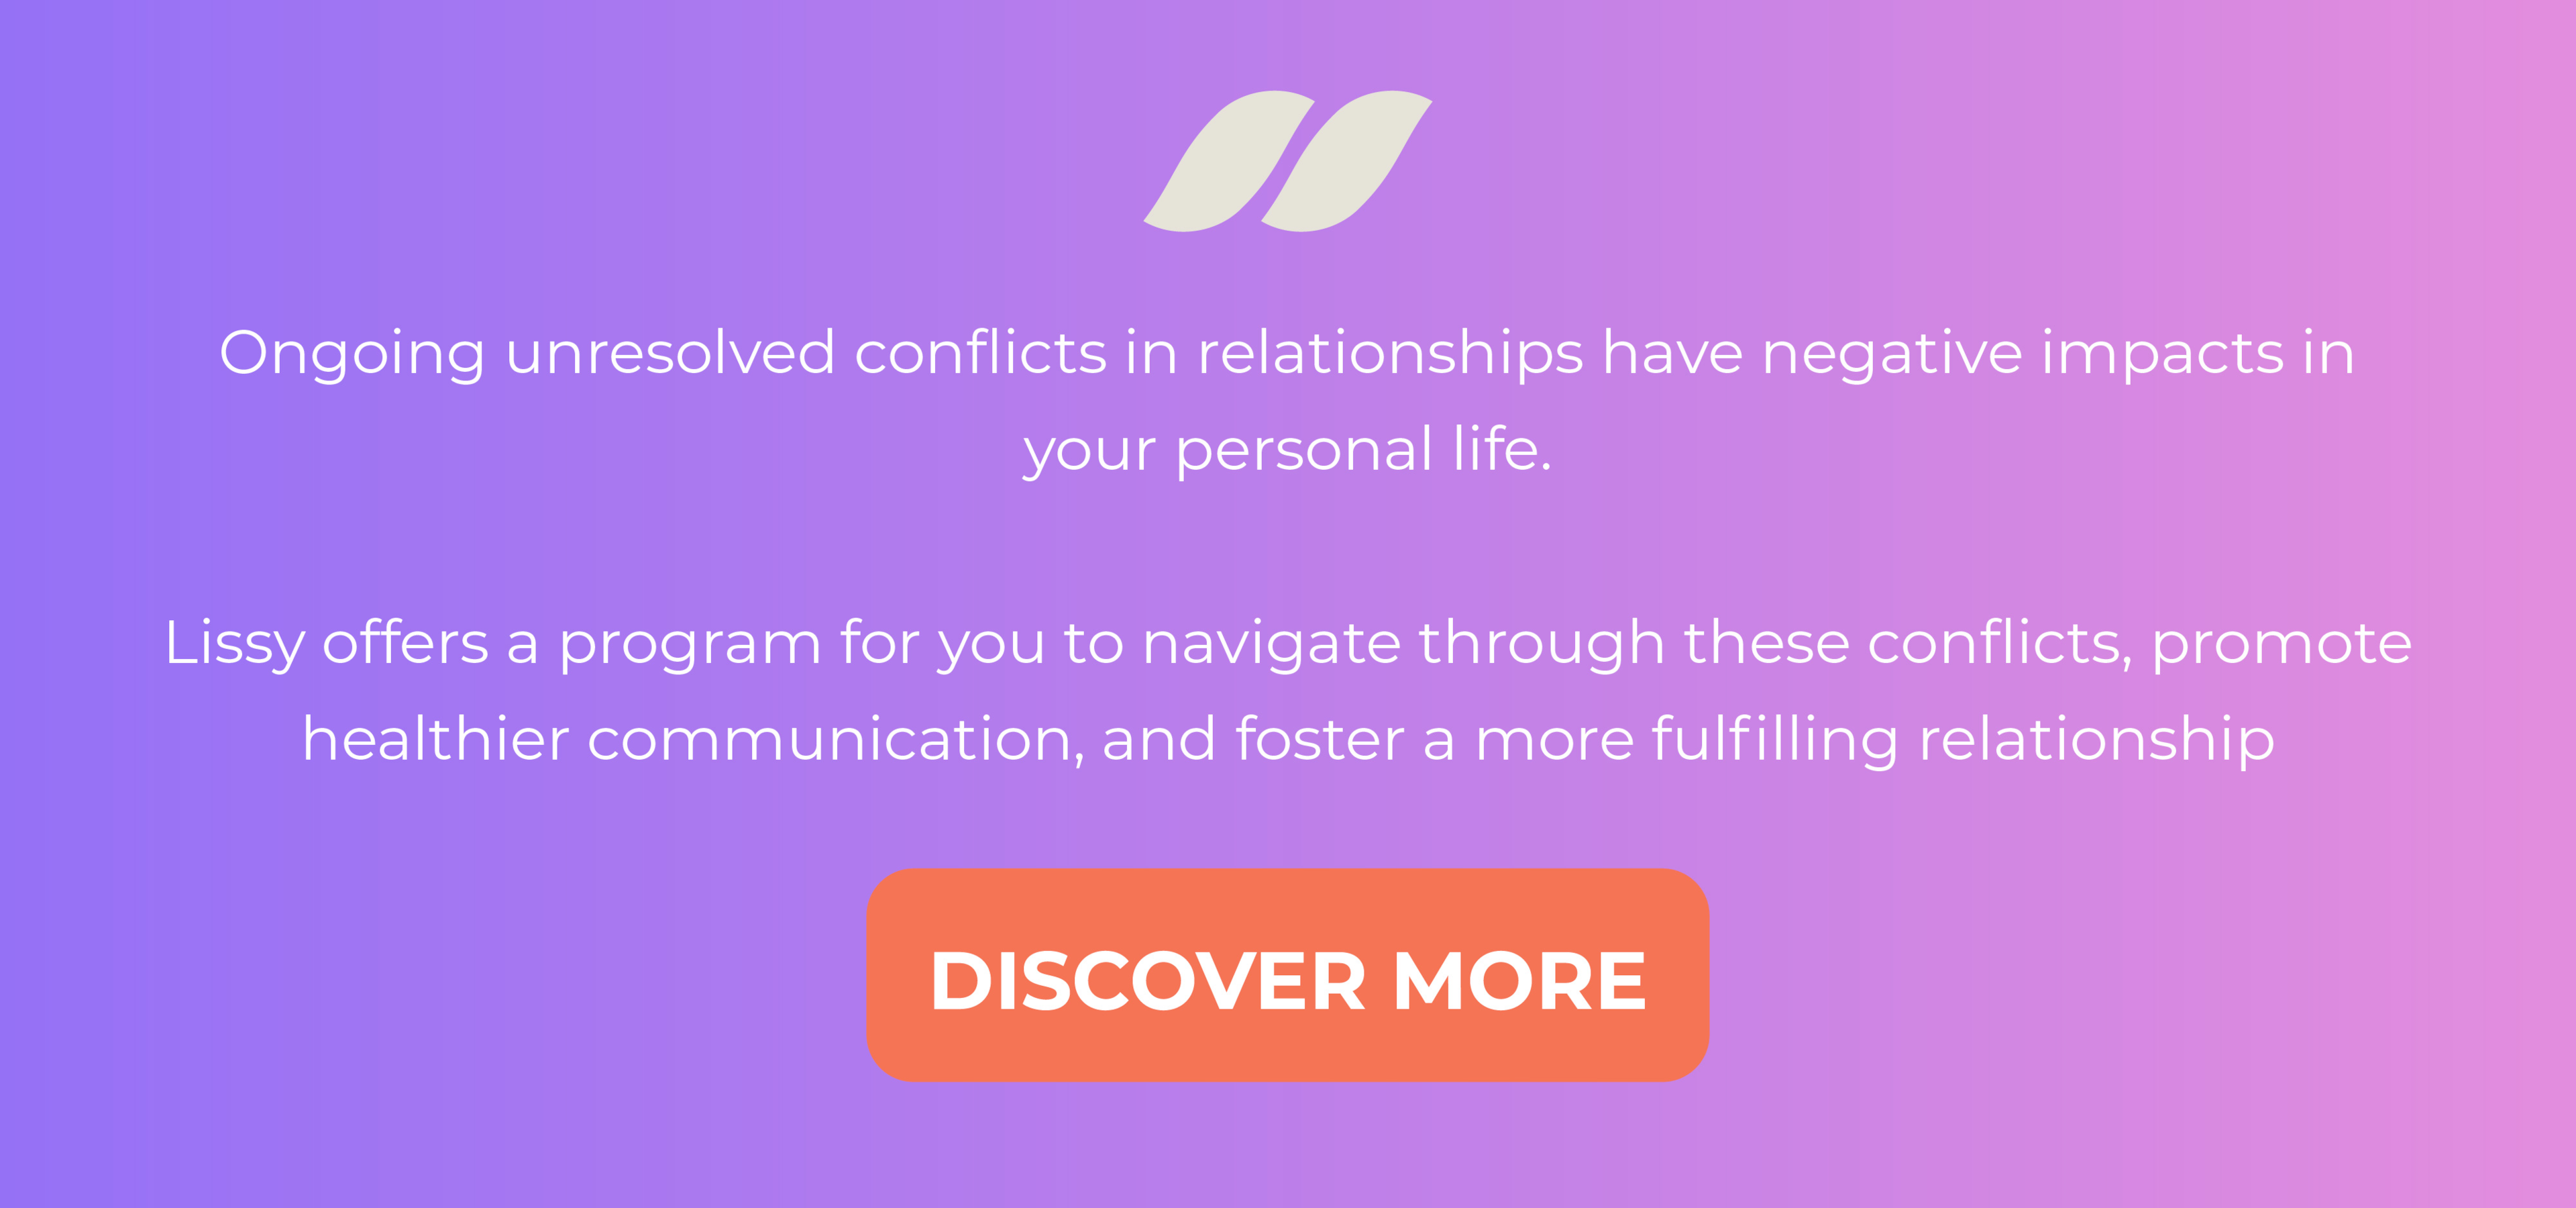 Navigate through emotional conflict through Fight Less, Love More program